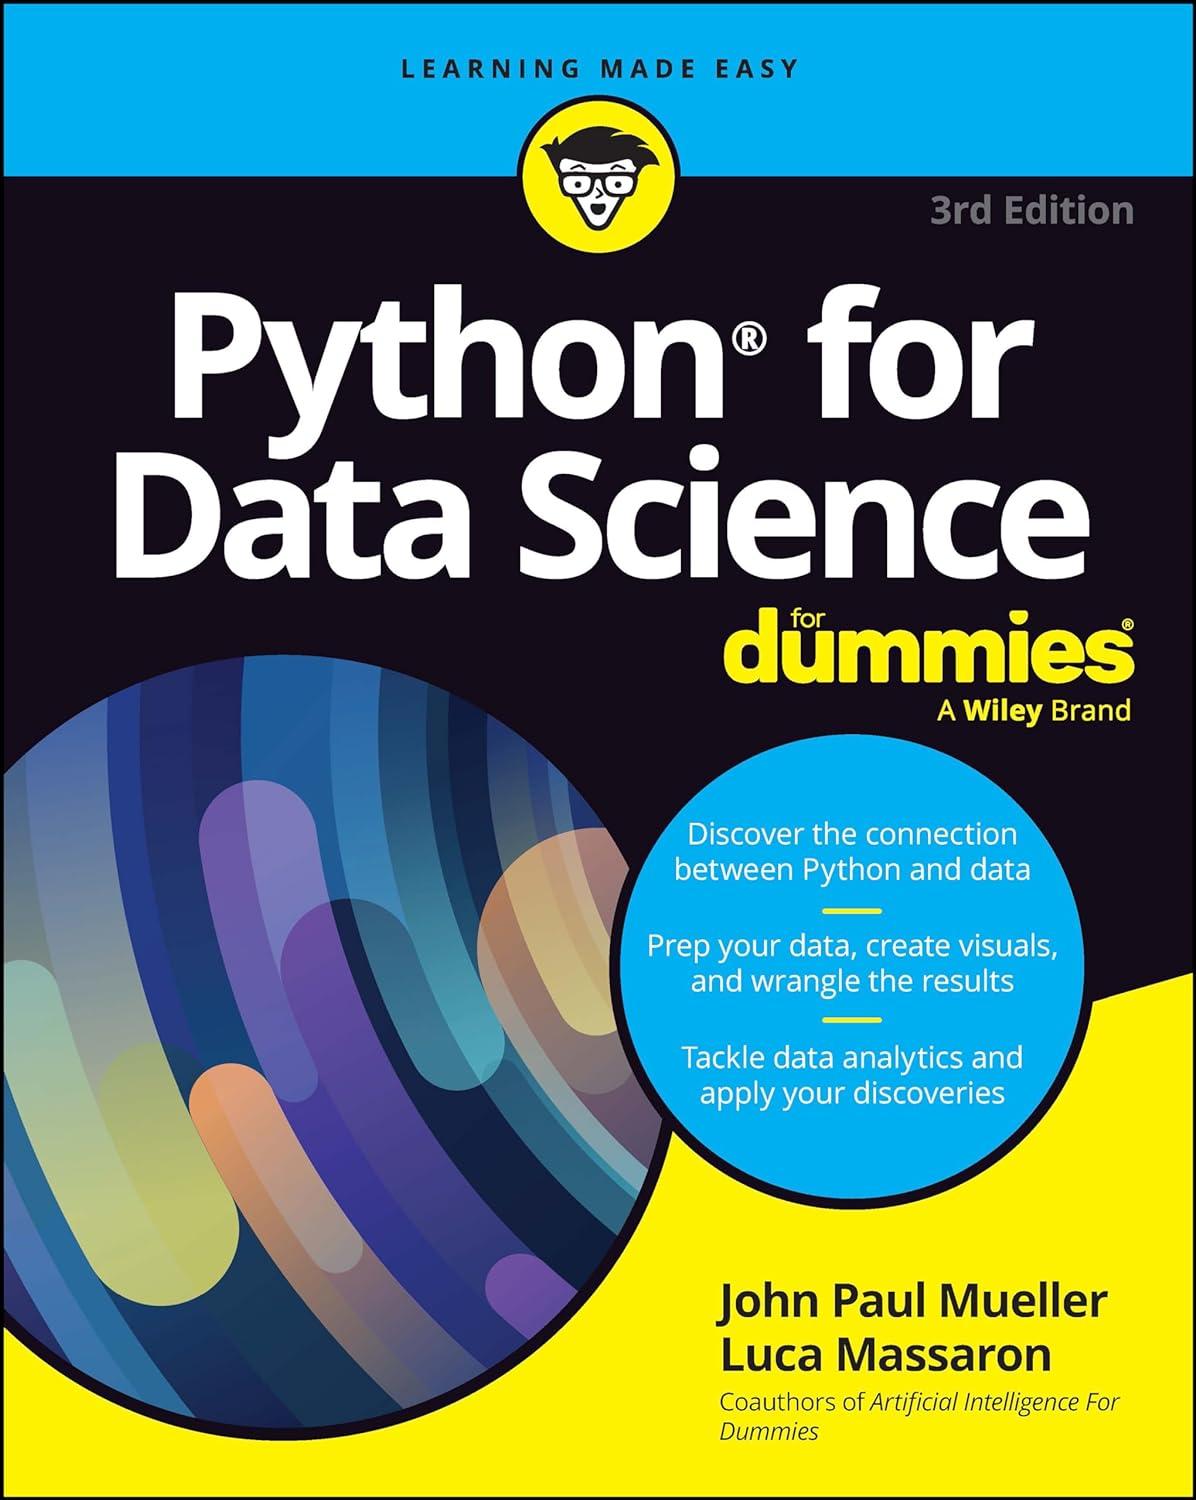 python for data science for dummies for dummies 3rd edition john paul mueller, luca massaron 139421314x,